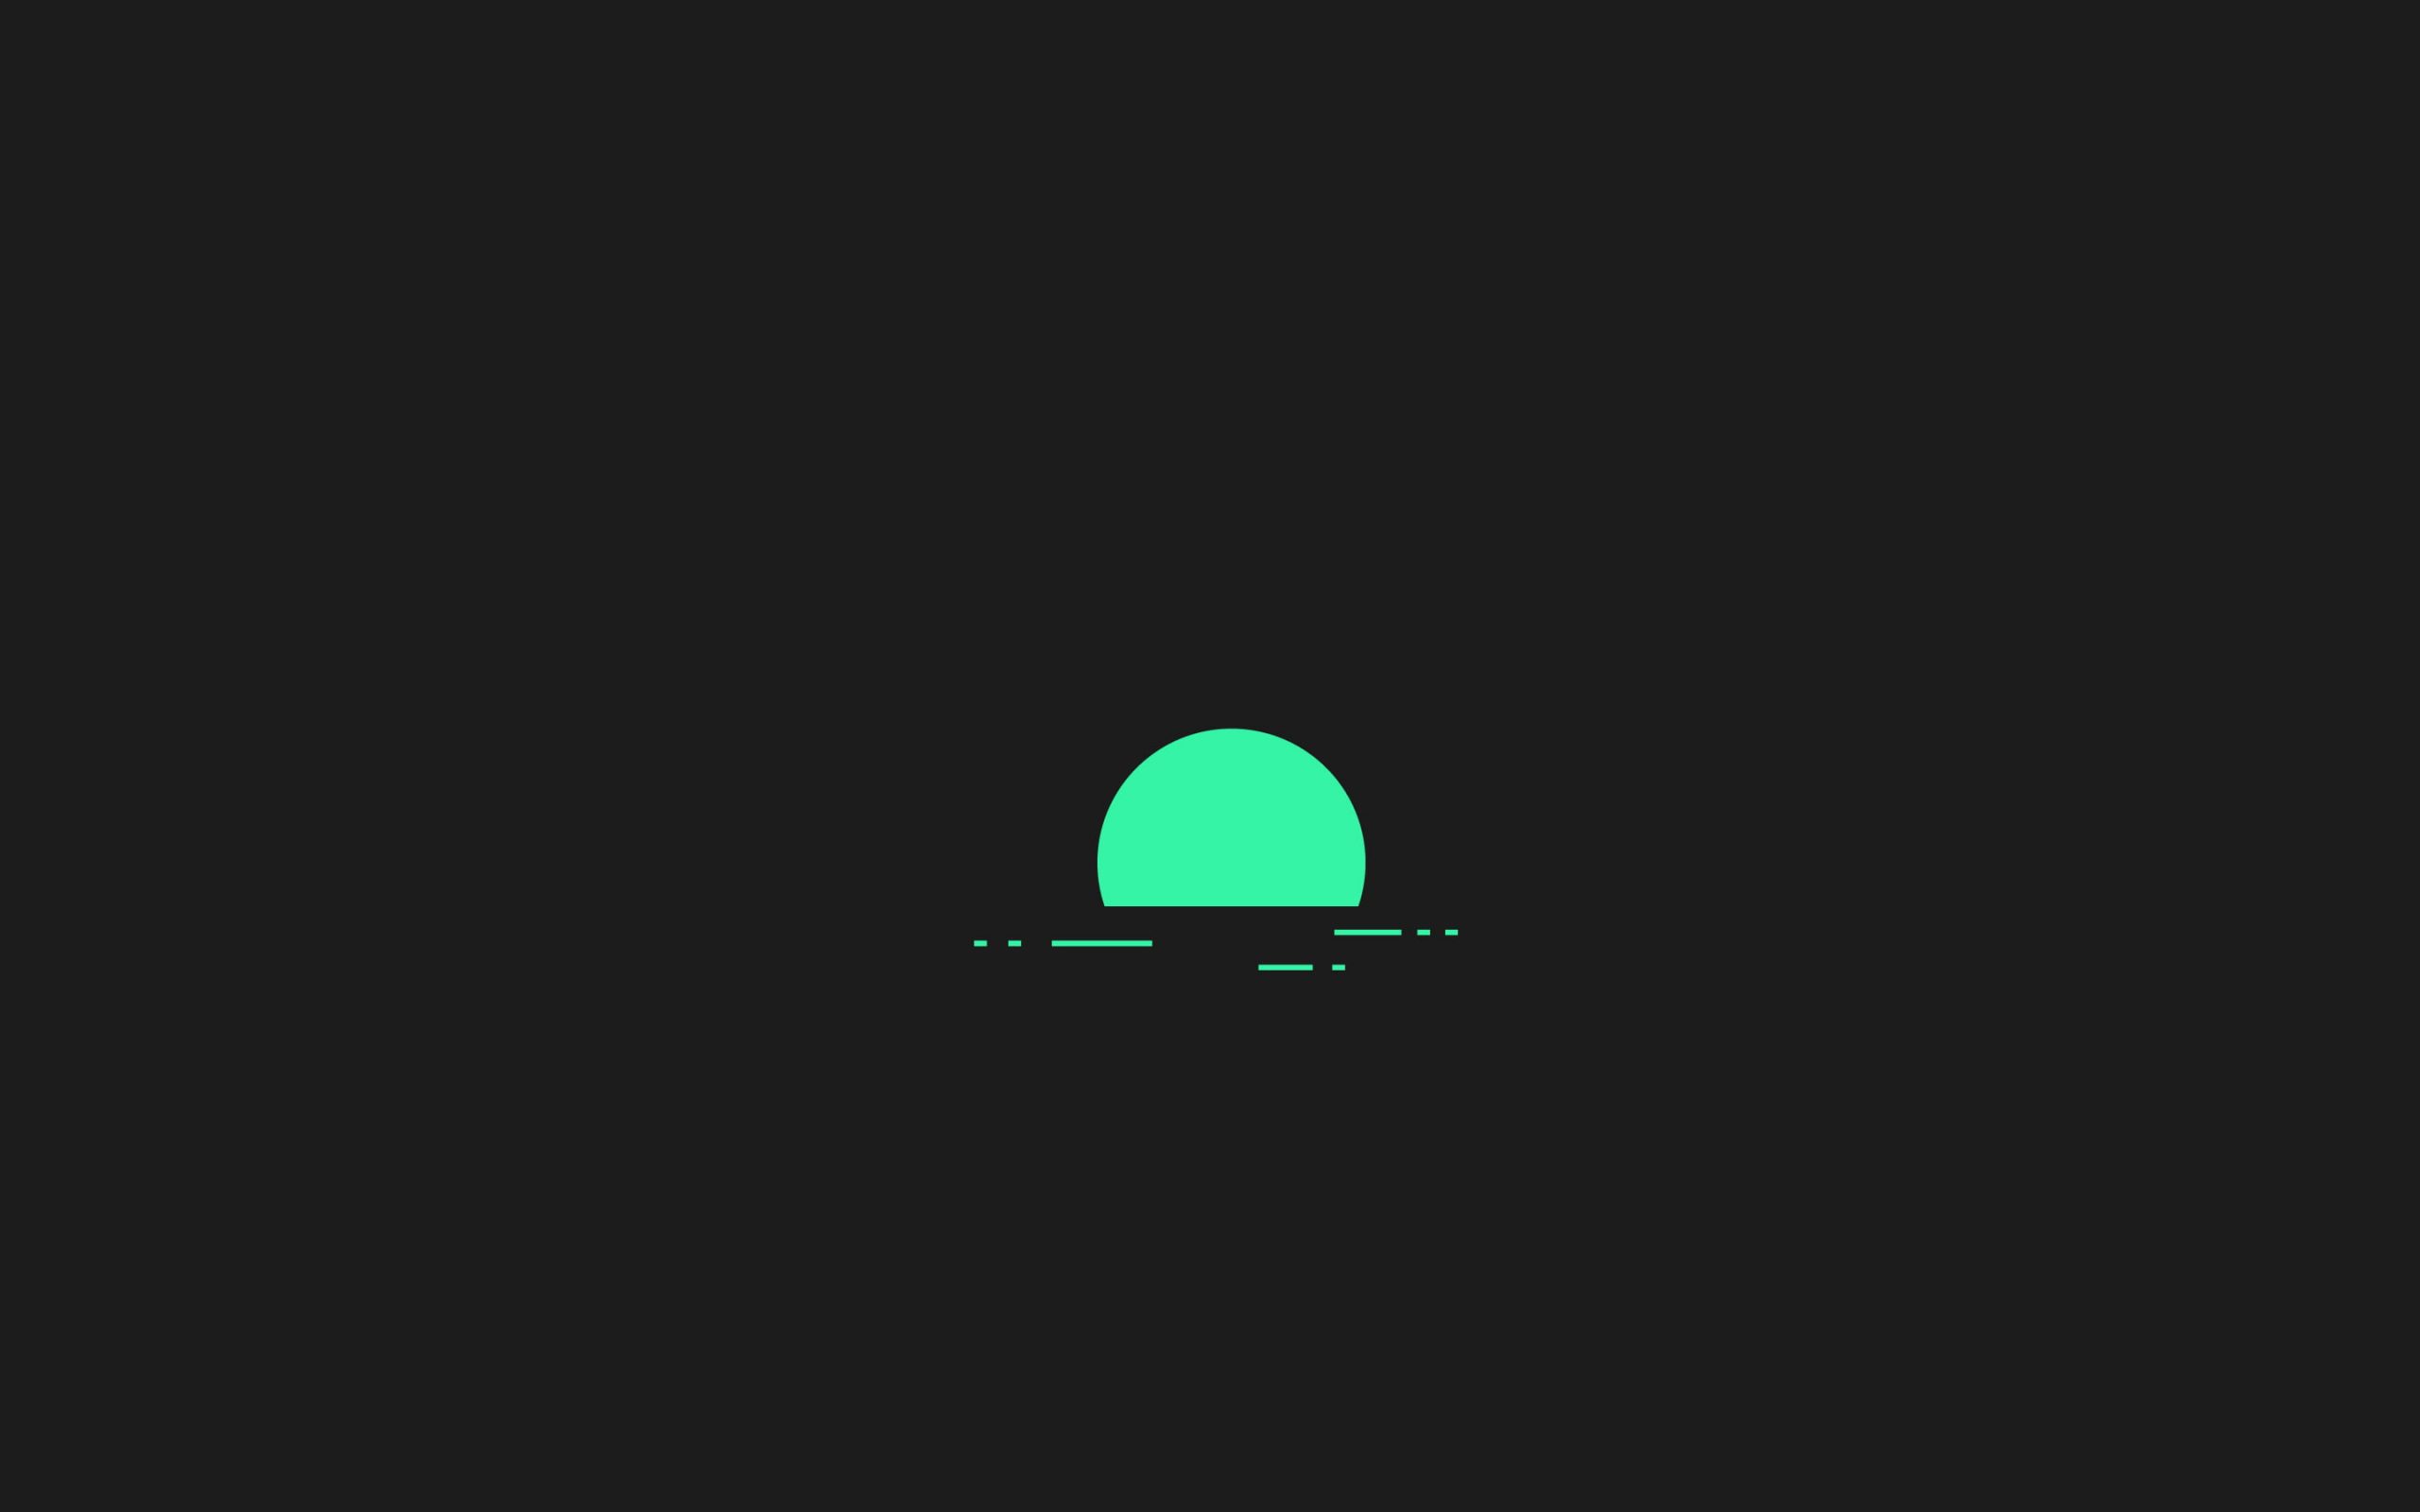 Green semi-circle on black background illustration, minimalism wallpaper